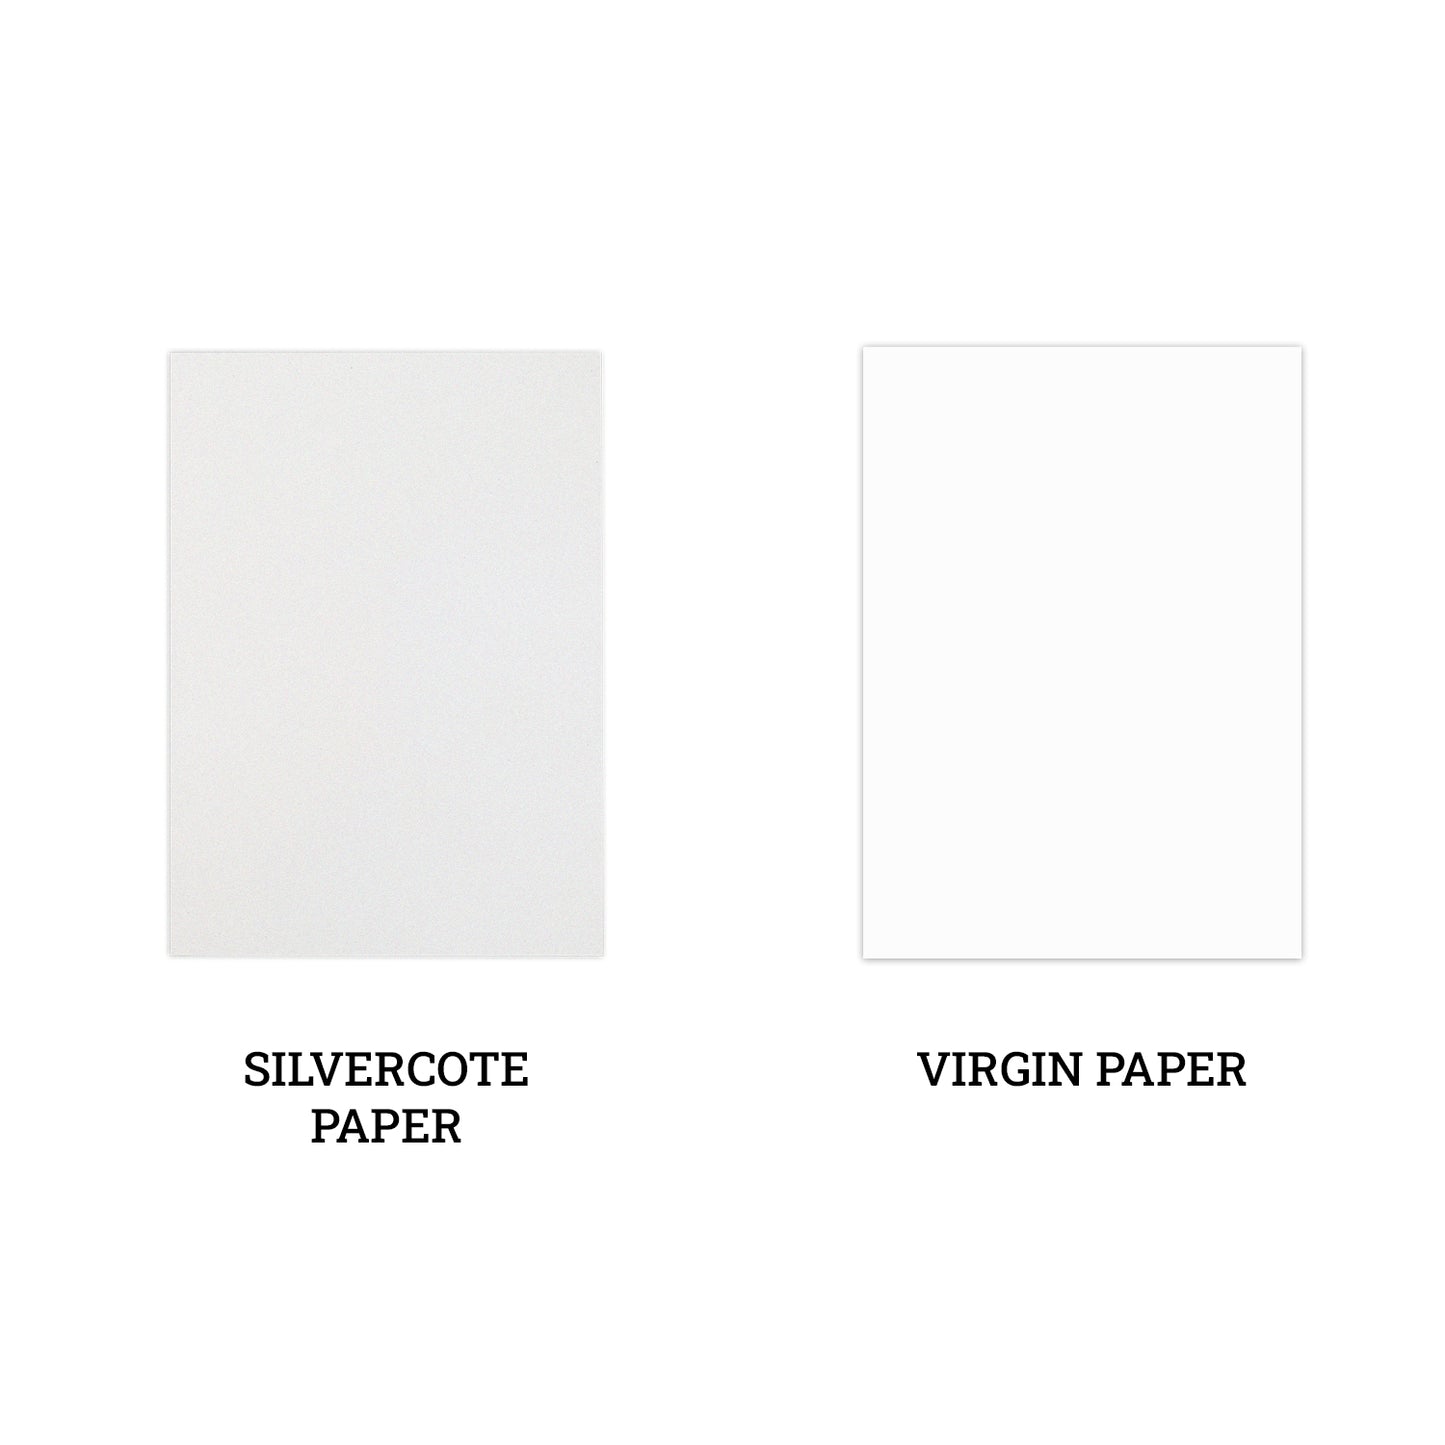 Packmate Silvercote A5-Kopierer, 1 Ries, 500 Blatt